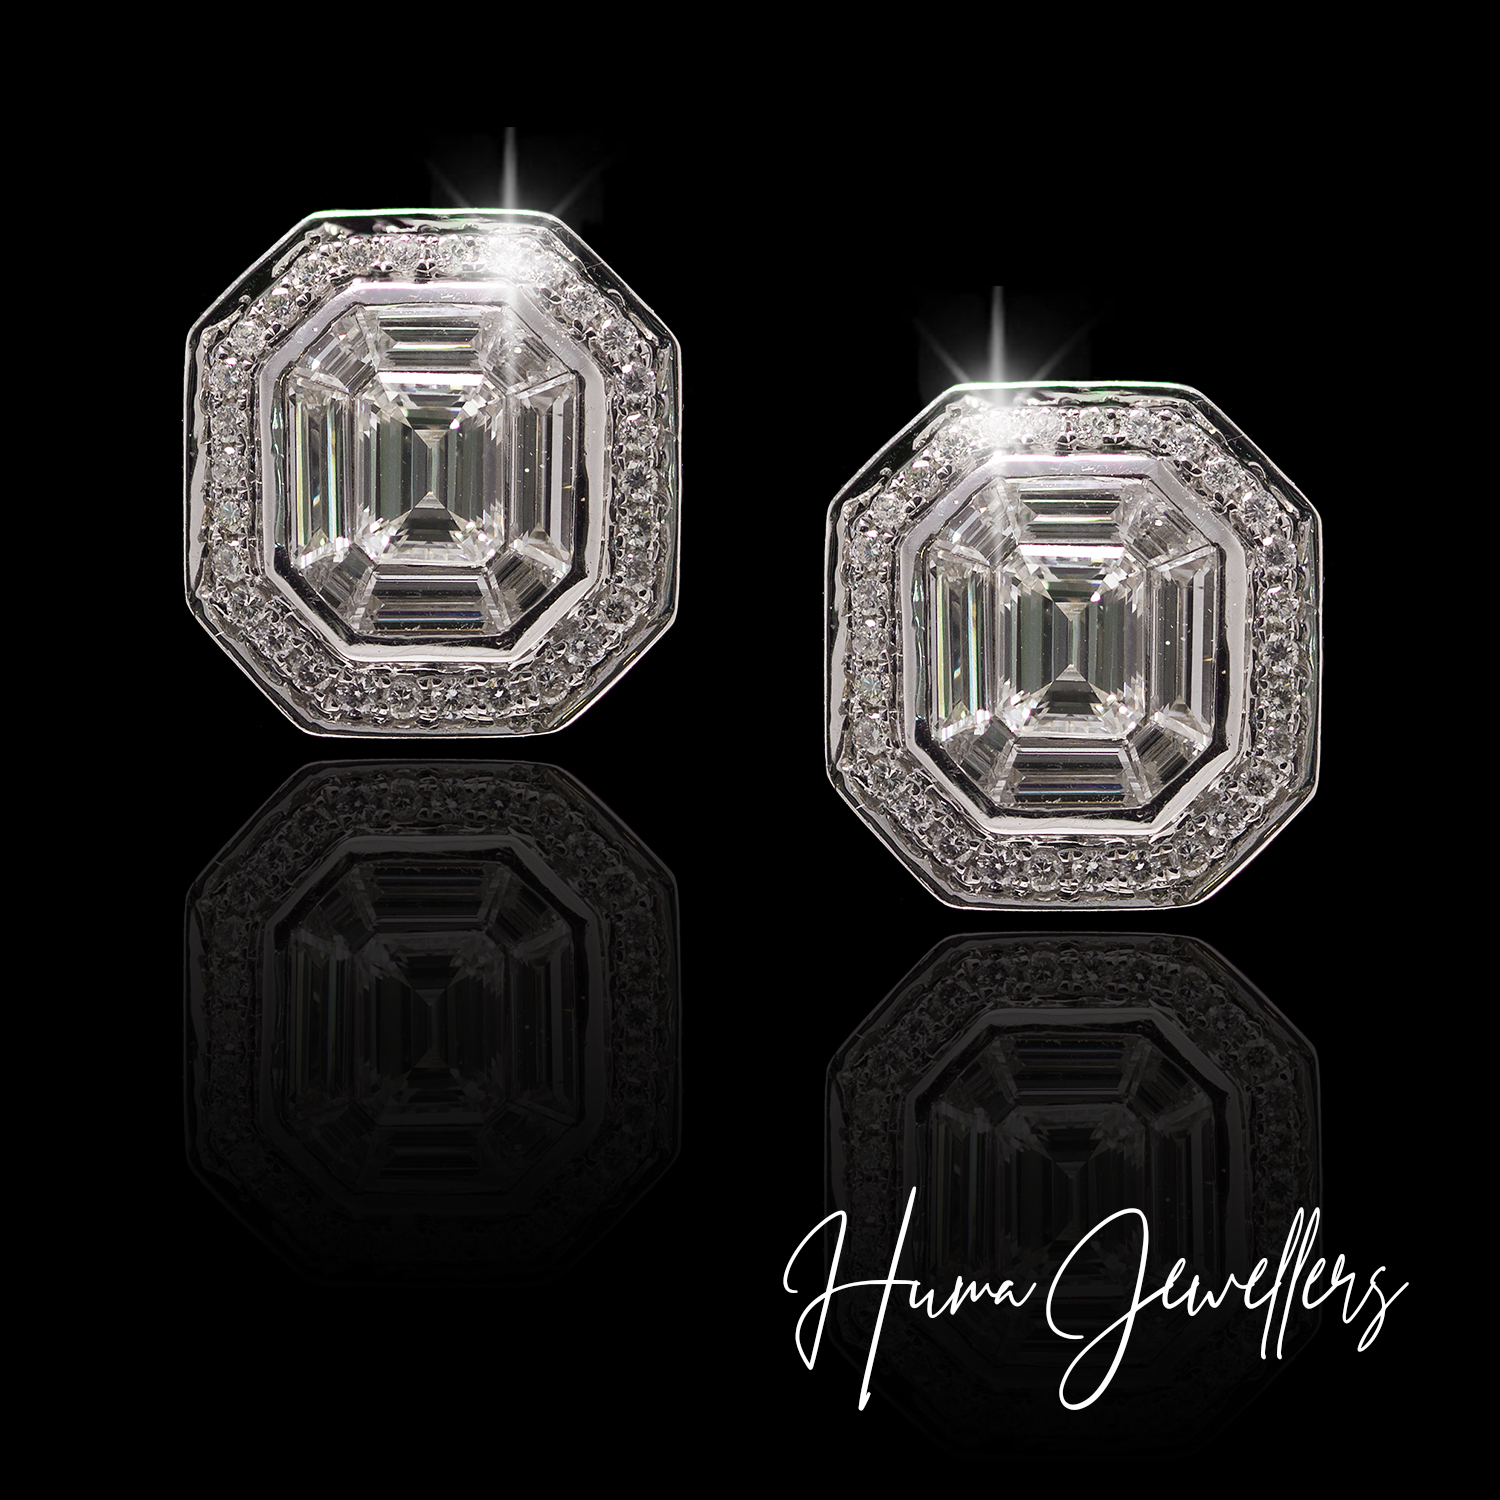 illusion setting diamond tops in emerald shaped diamond made with precision in 18 karat gold by huma jewellers karachi pakistan